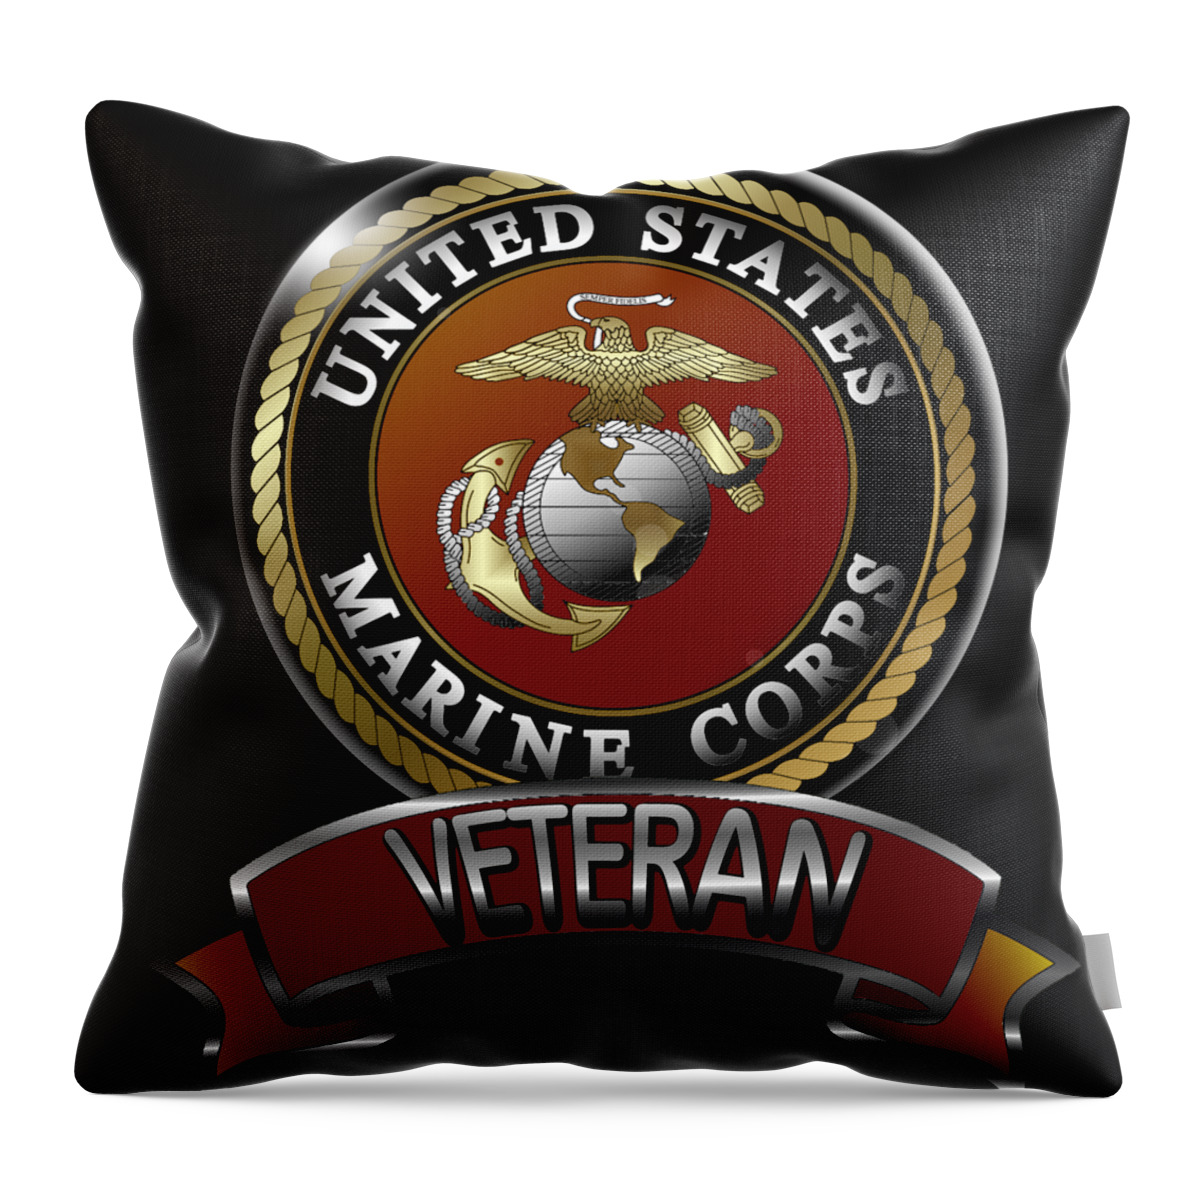 Marines Throw Pillow featuring the digital art Marine Veteran by Bill Richards